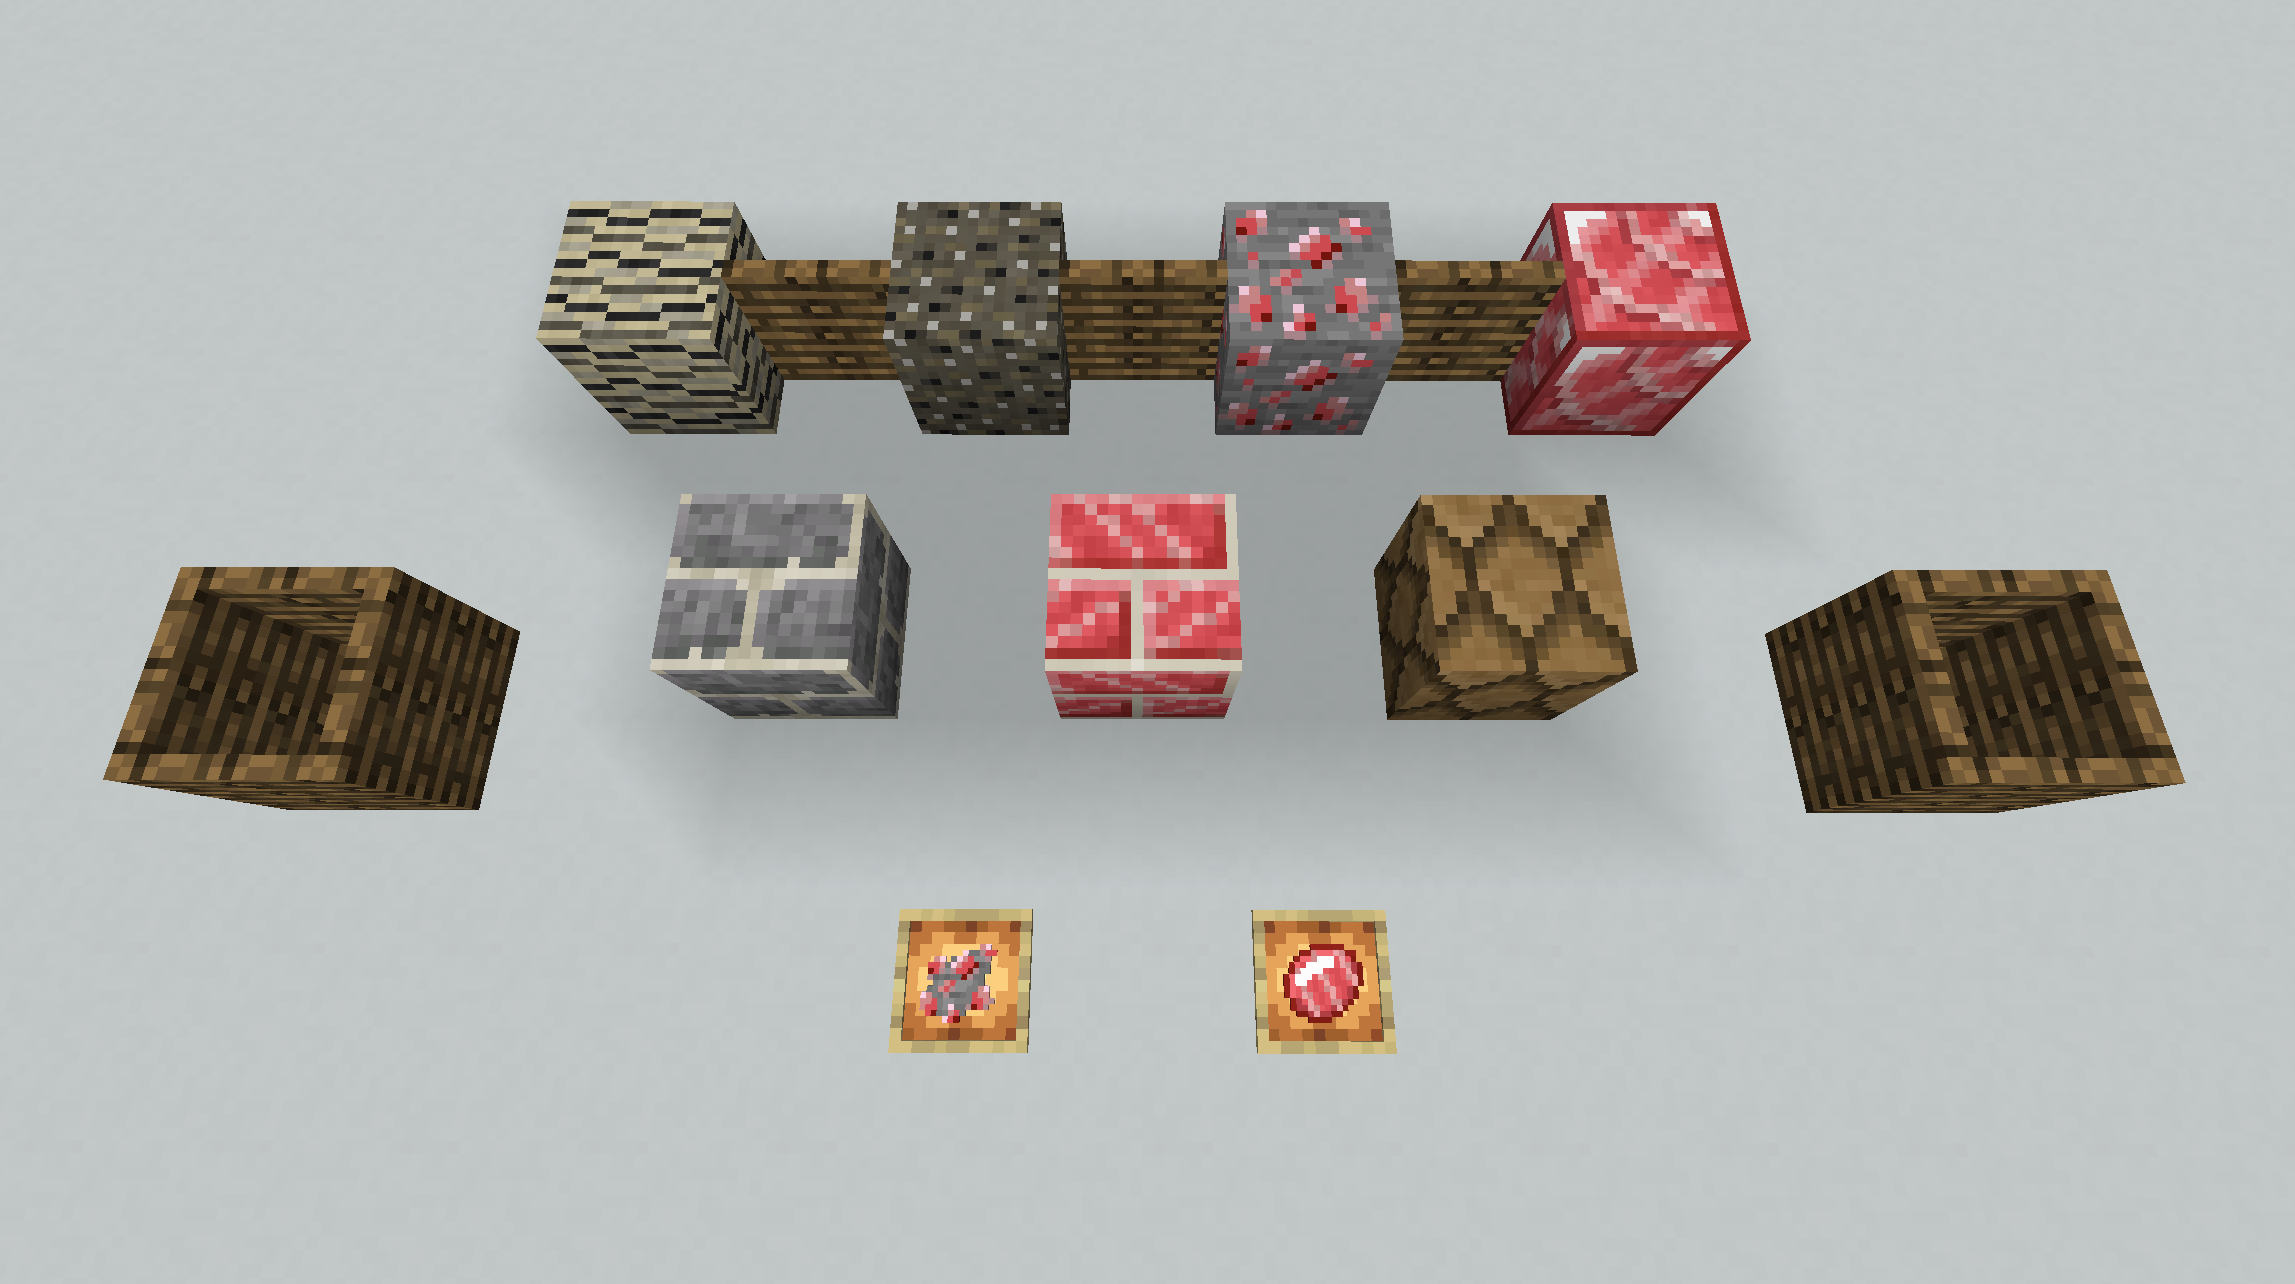 Gneiss, schist, rhodochrosite ore, polished, bricks, brown scale tiles and wattle